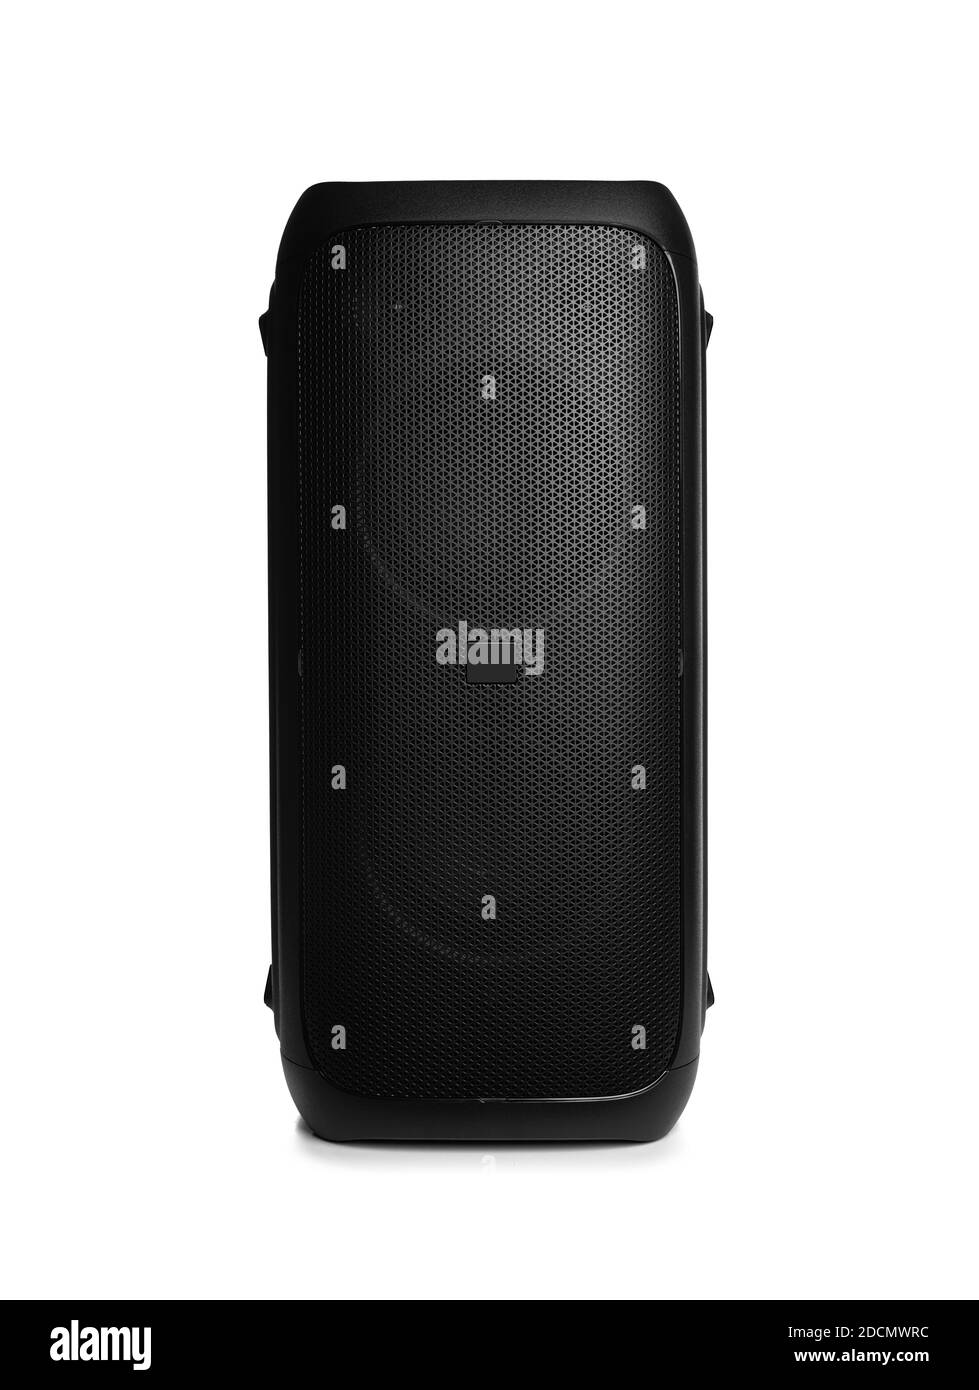 Portable big black speaker isolated on a white background. Stock Photo